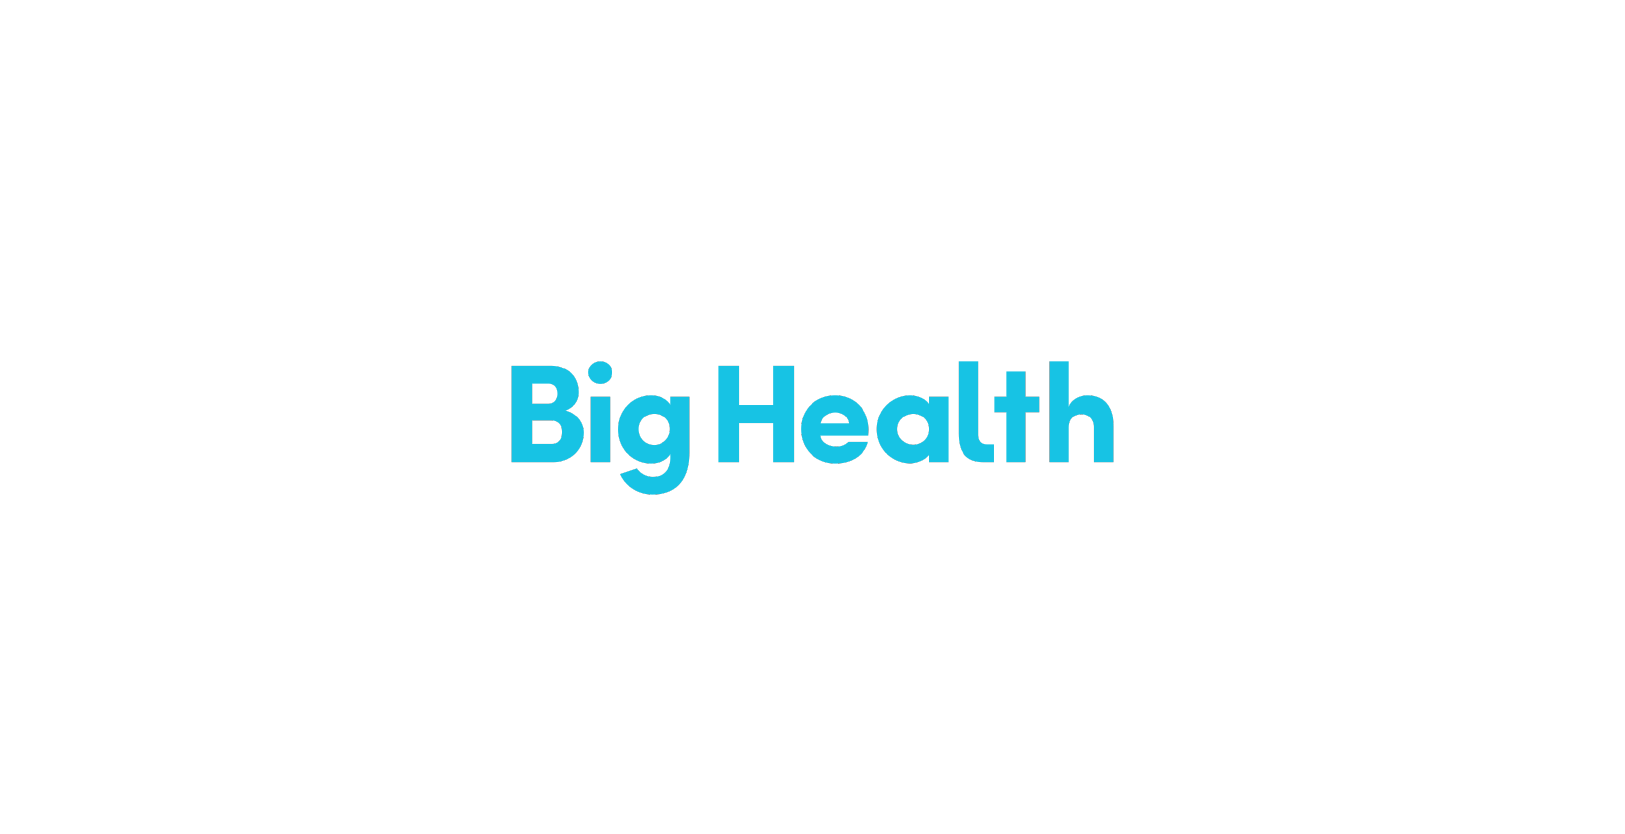 Vision Fund investment portfolio company Big Health's logo